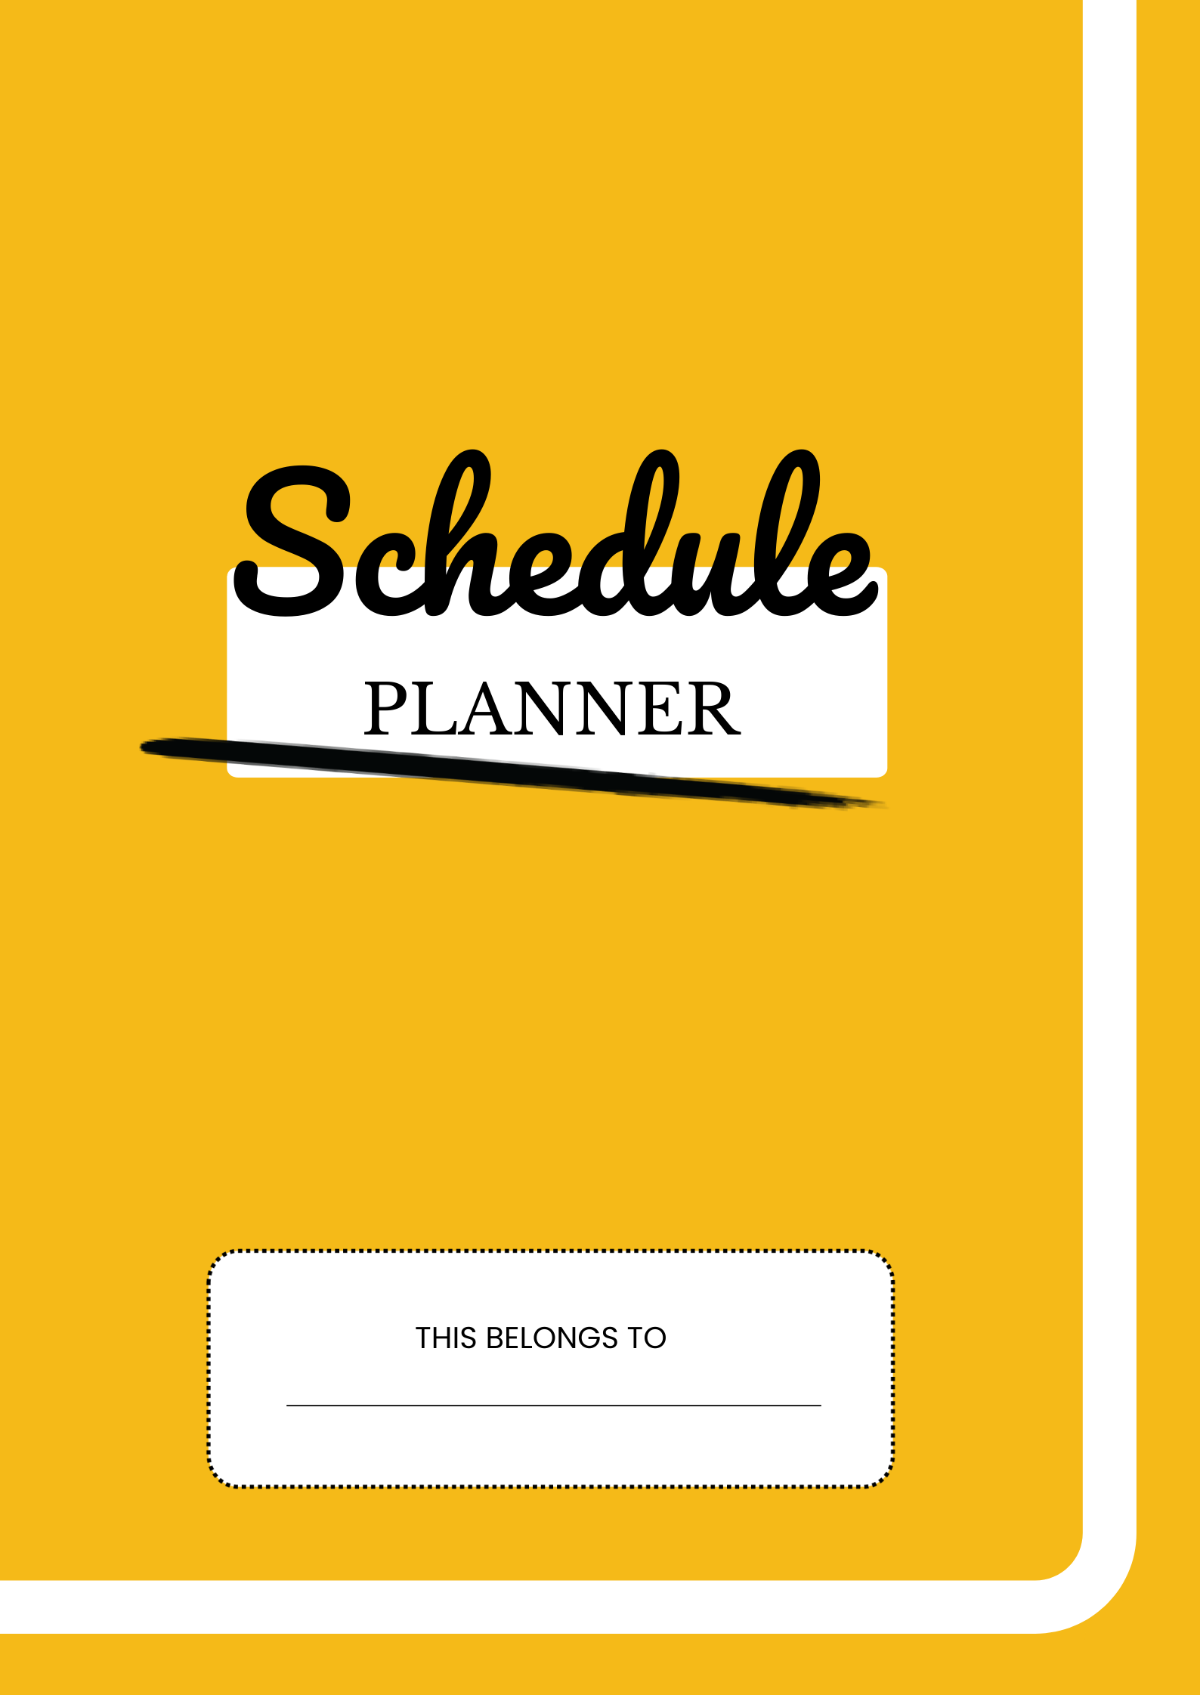 Editable Schedule Planner Template